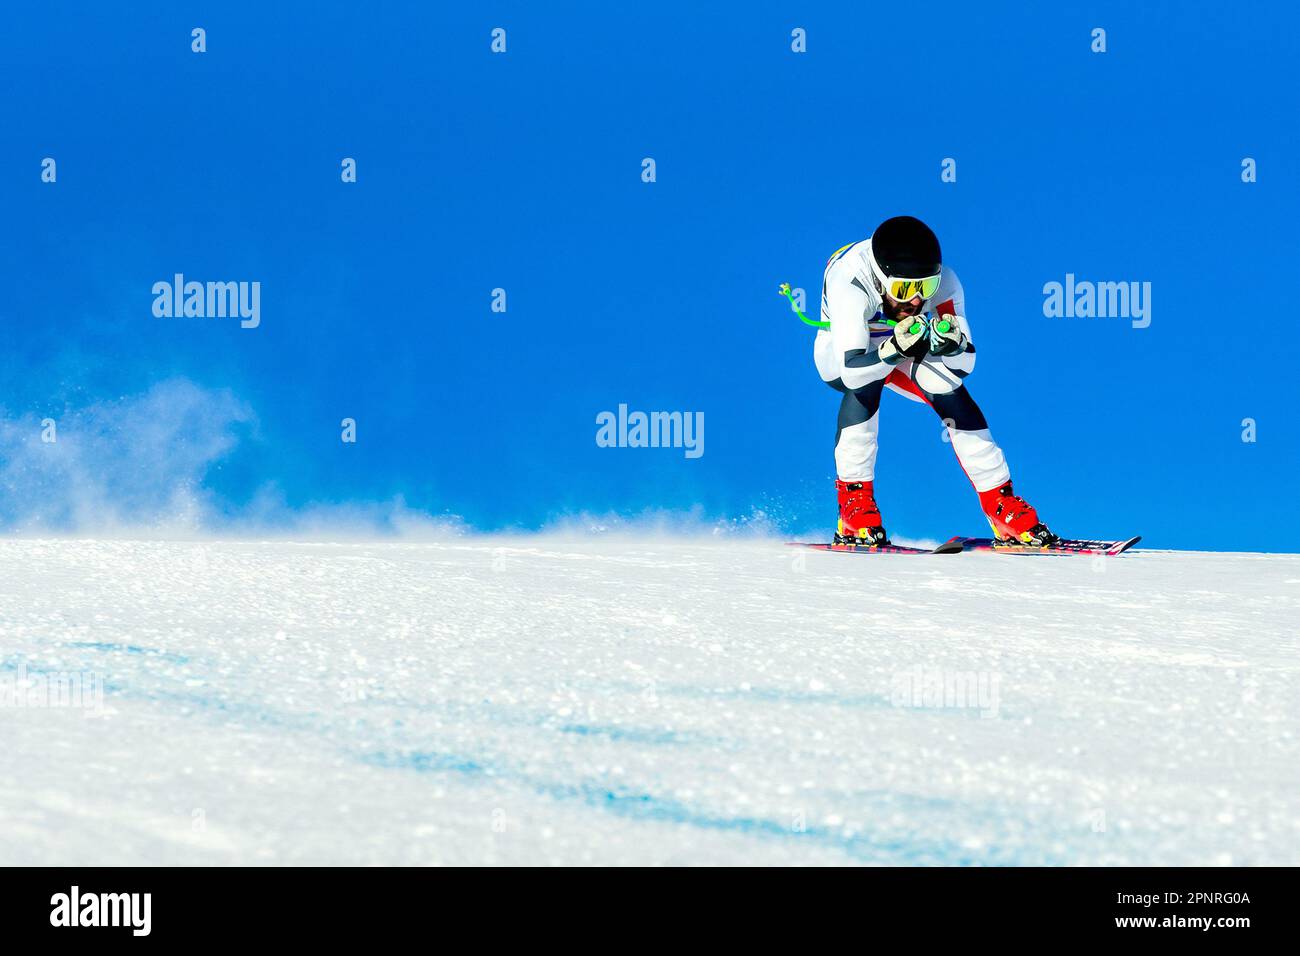 male ski racer on alpine skiing track downhill race, winter sports games Stock Photo